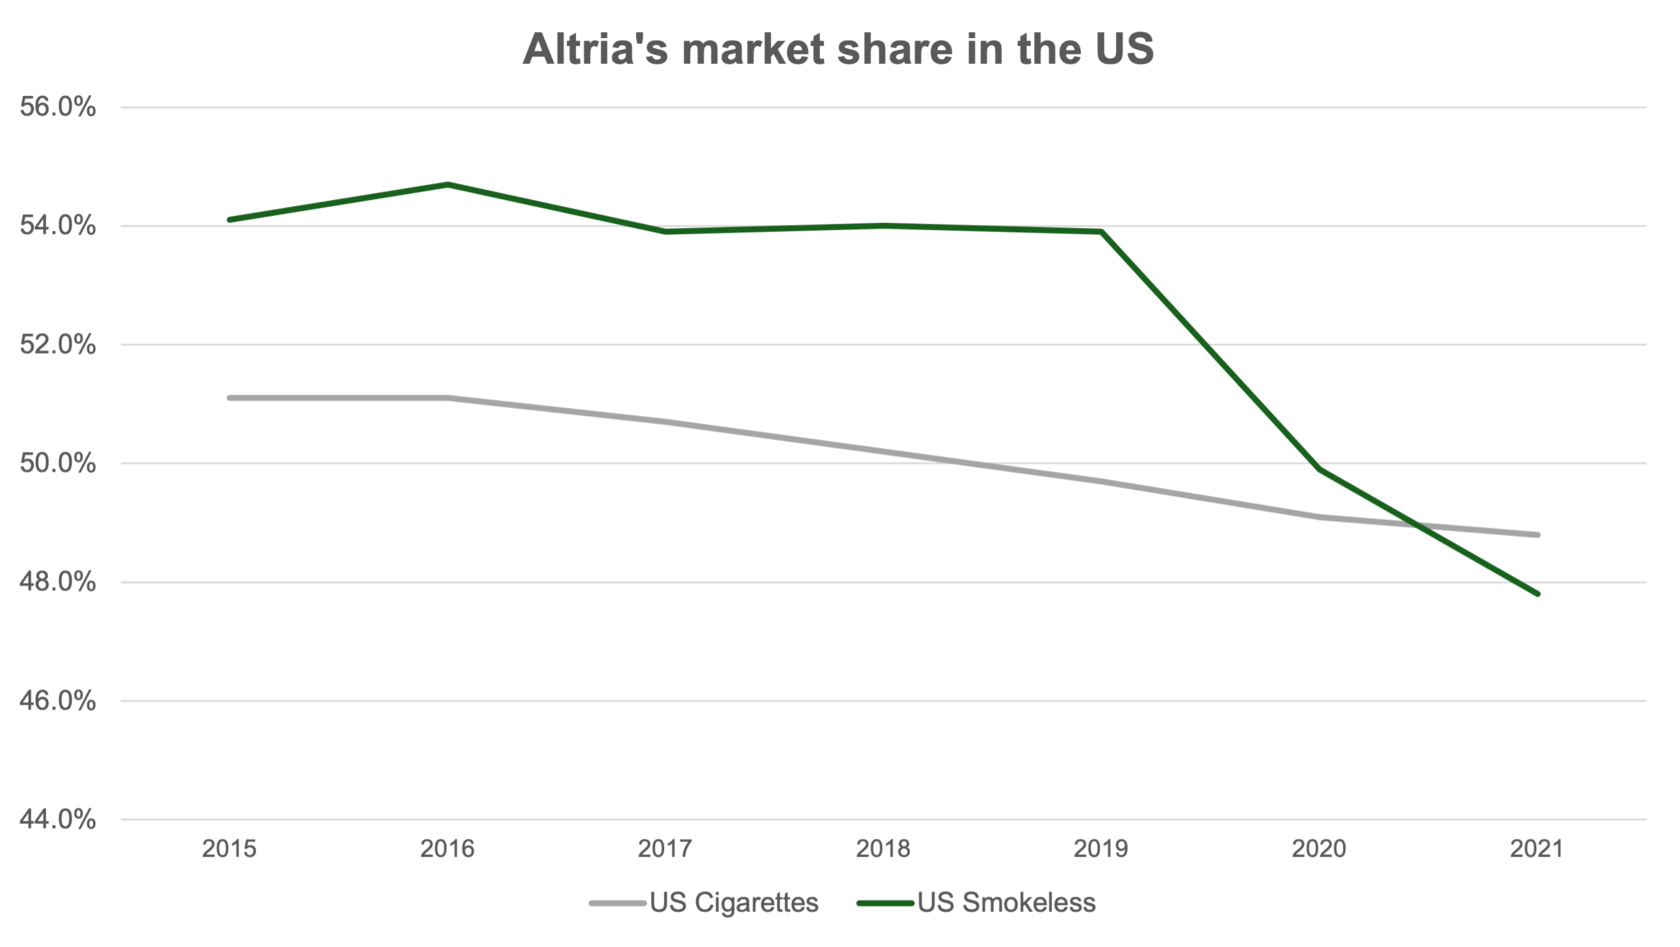 Altria's market share in the US